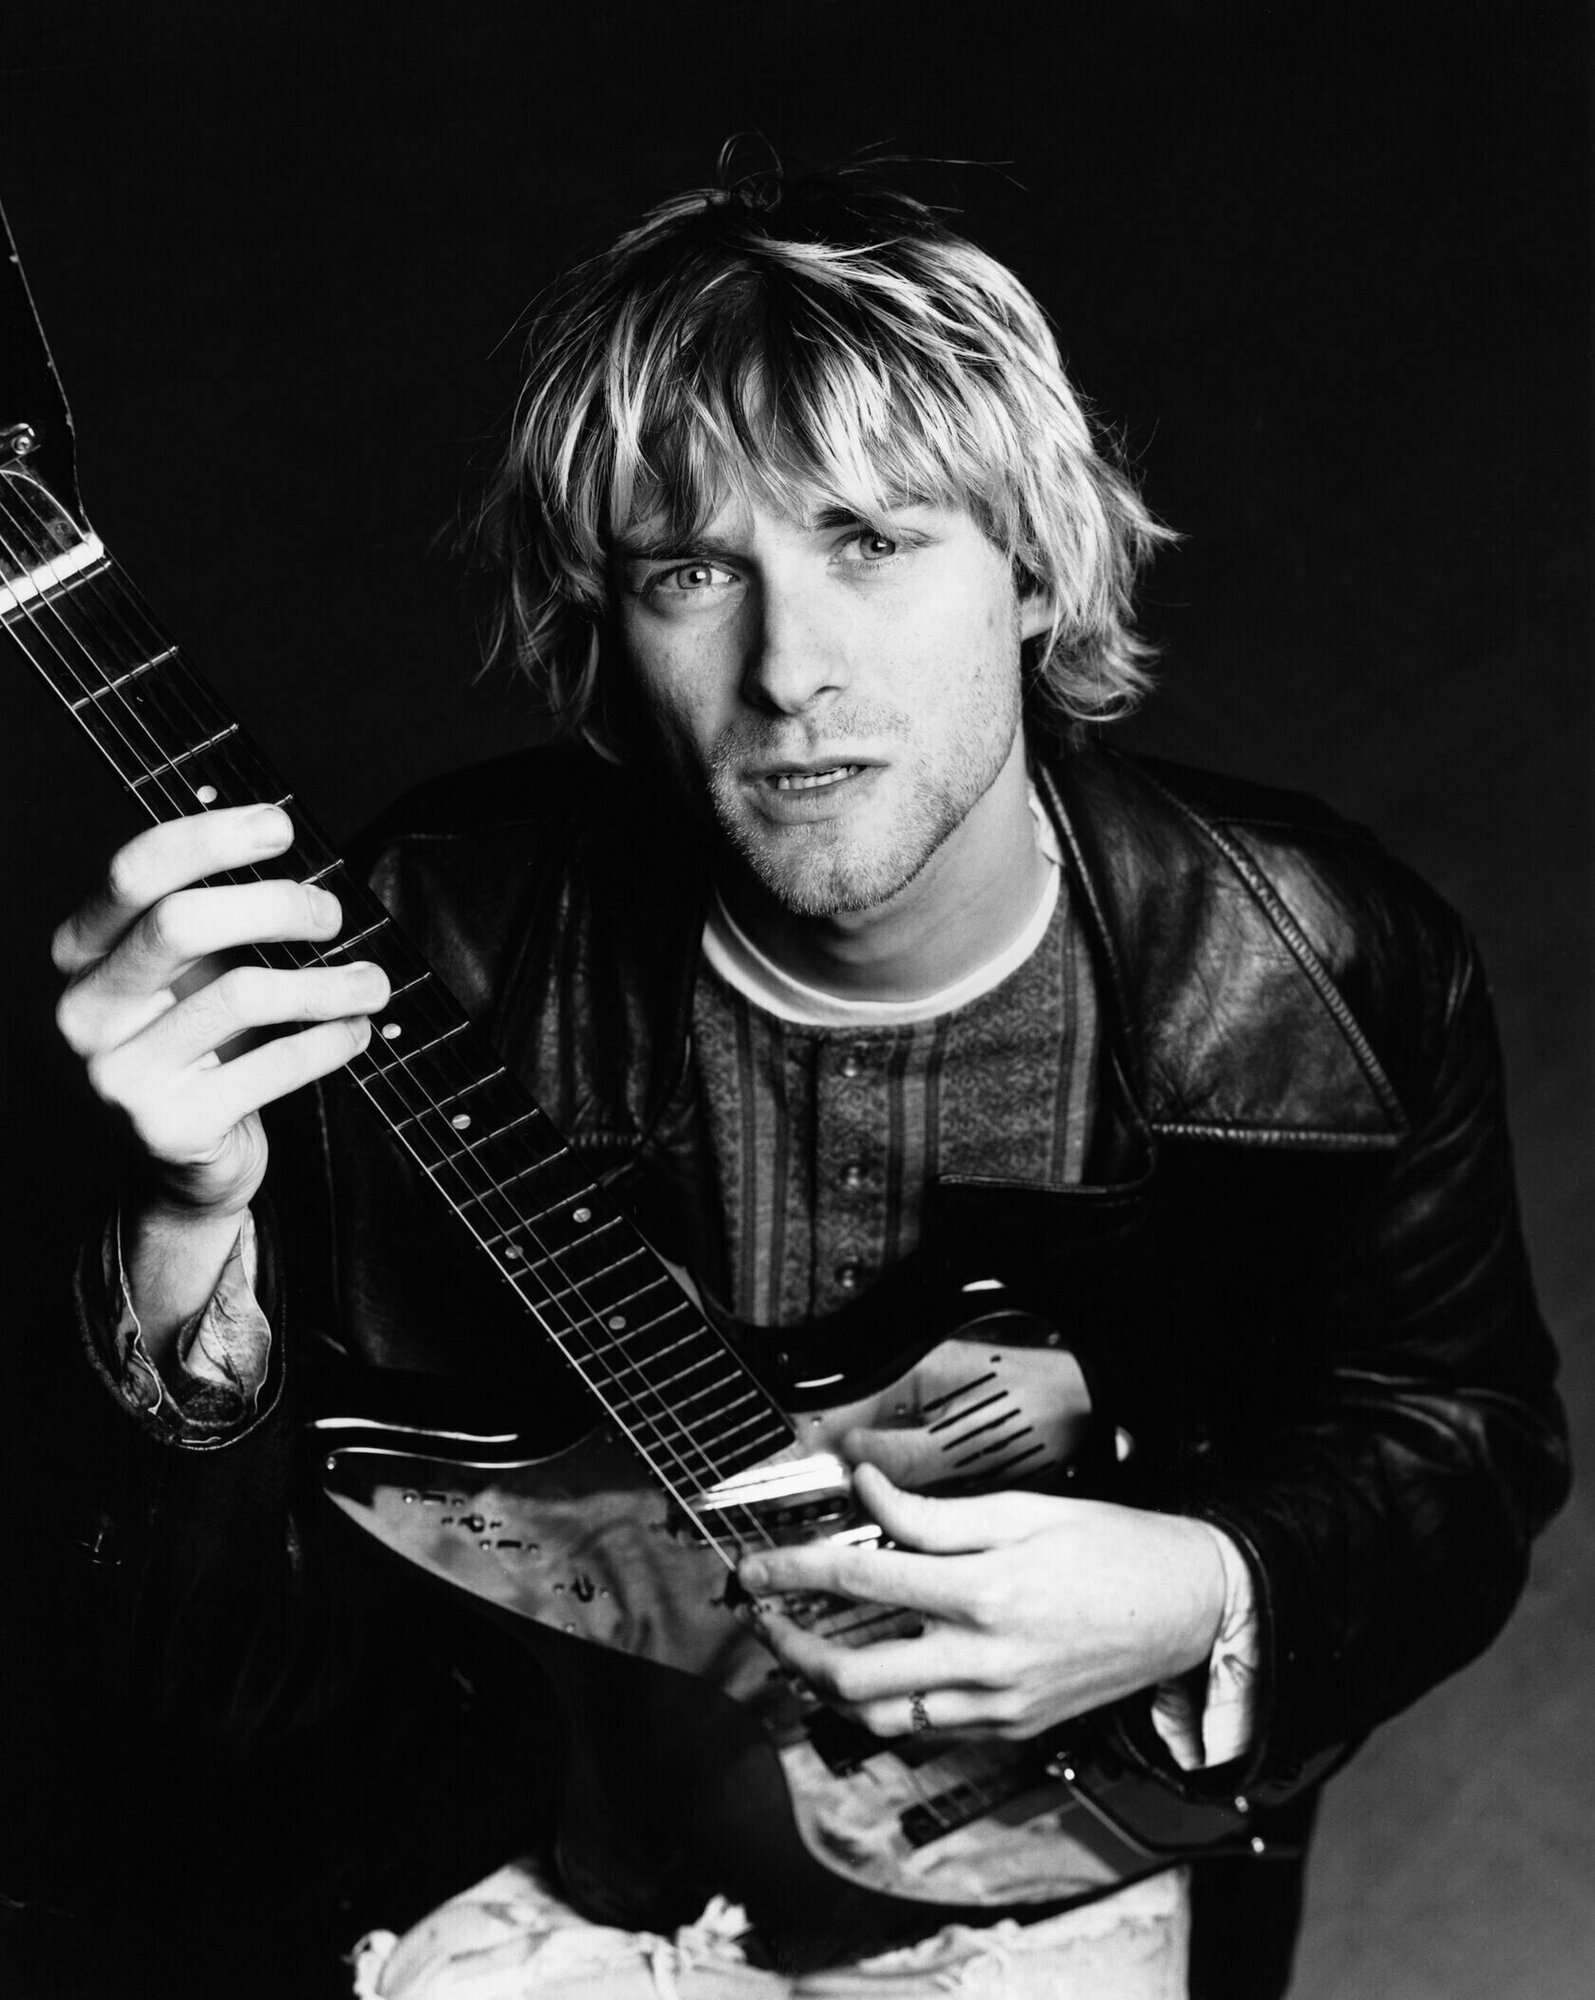 Плакат постер на бумаге Kurt Cobain (Курт Кобейн Nirvana). Размер 21 х 30 см